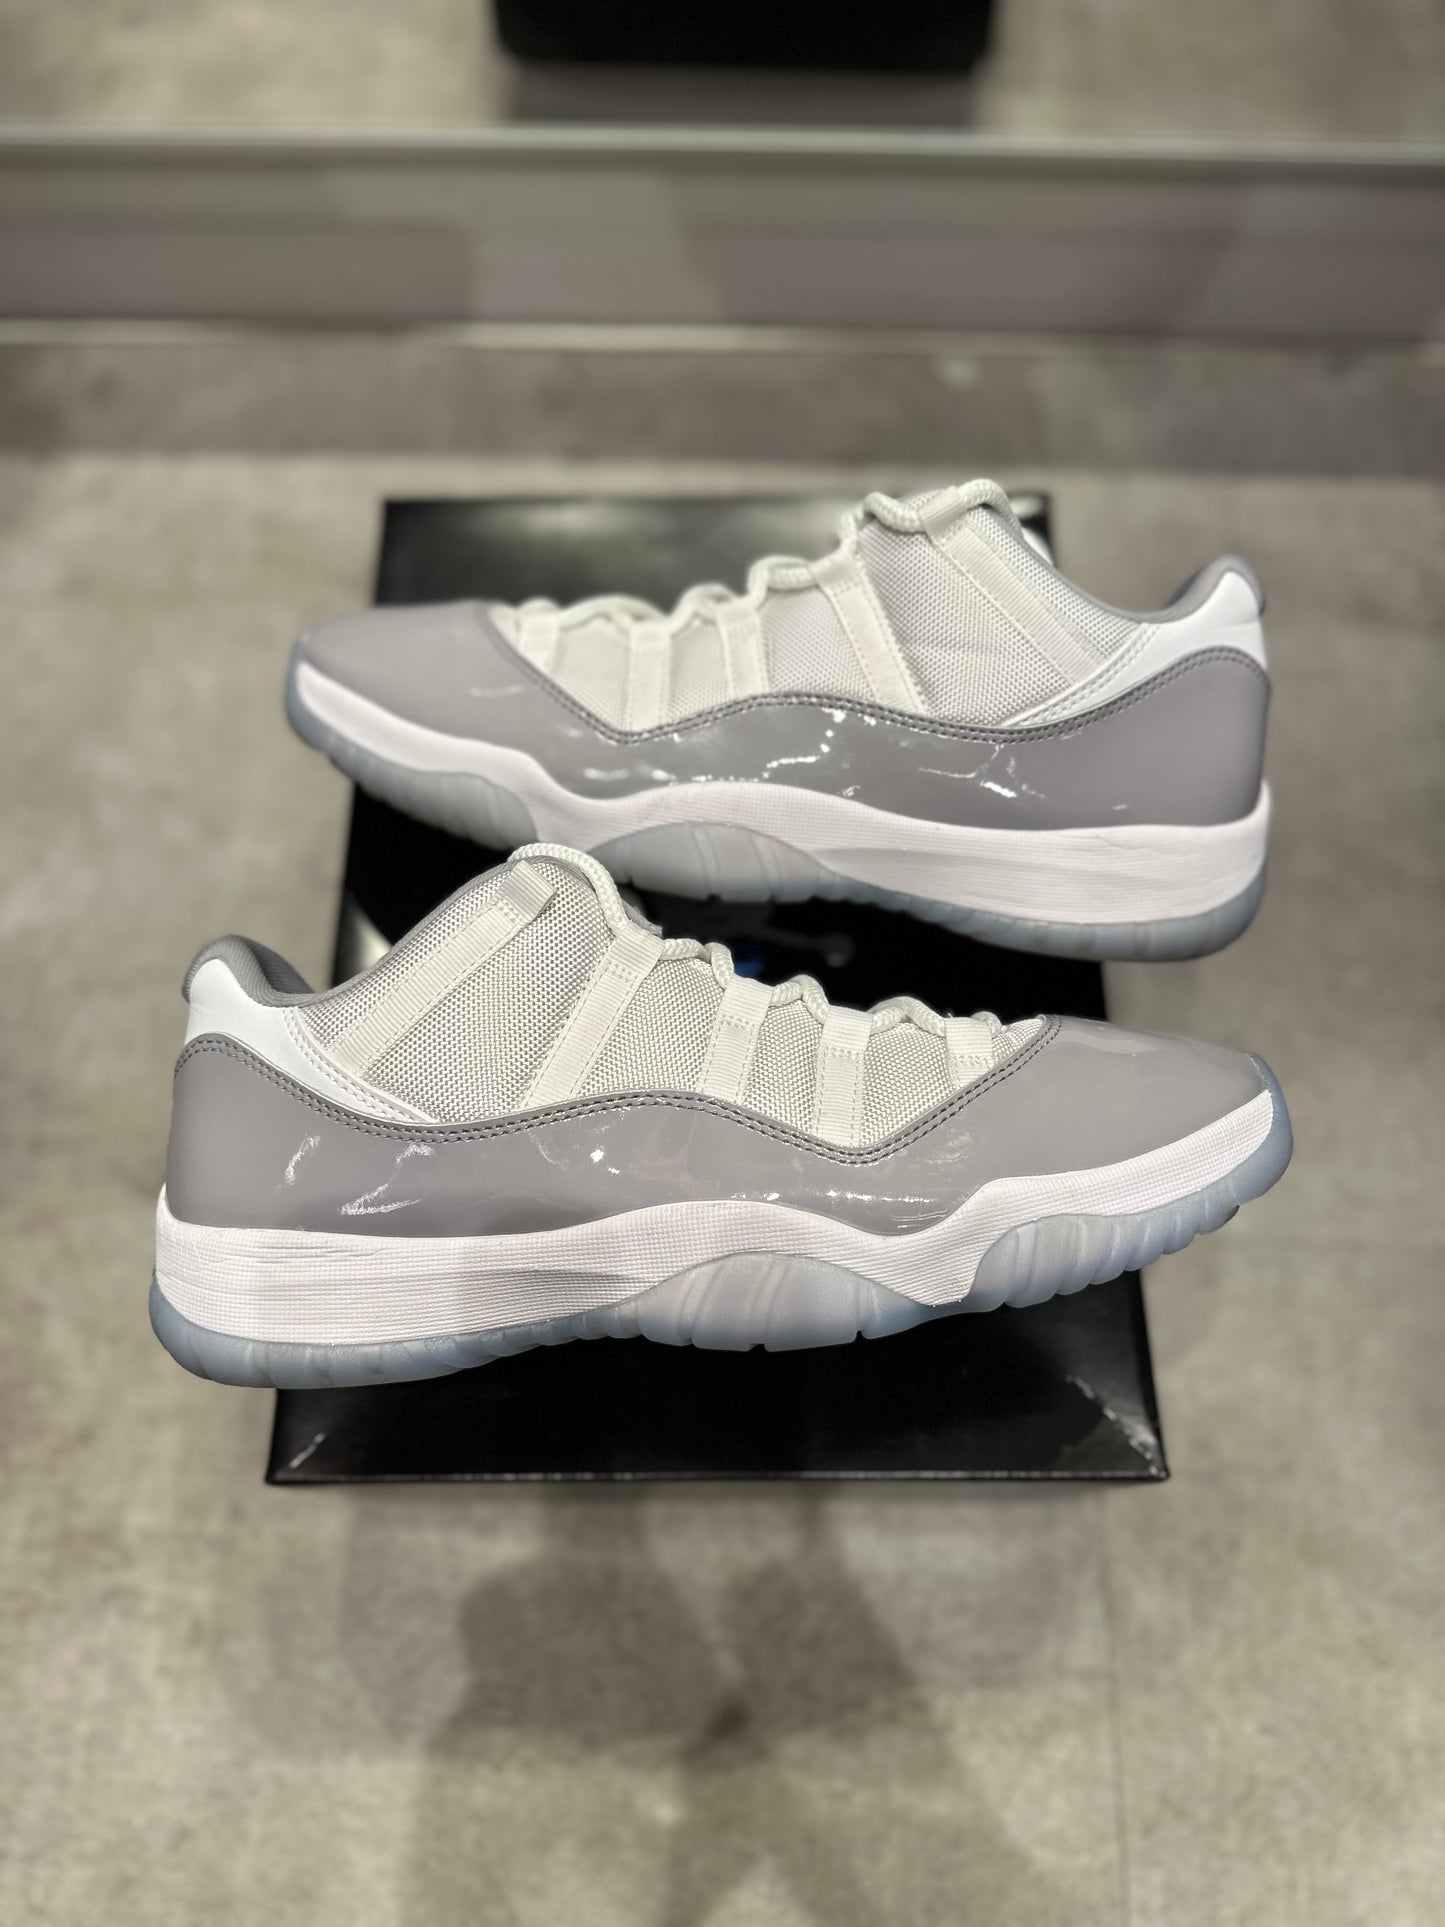 Jordan 11 Retro Low Cement Grey (Preowned Size 11)